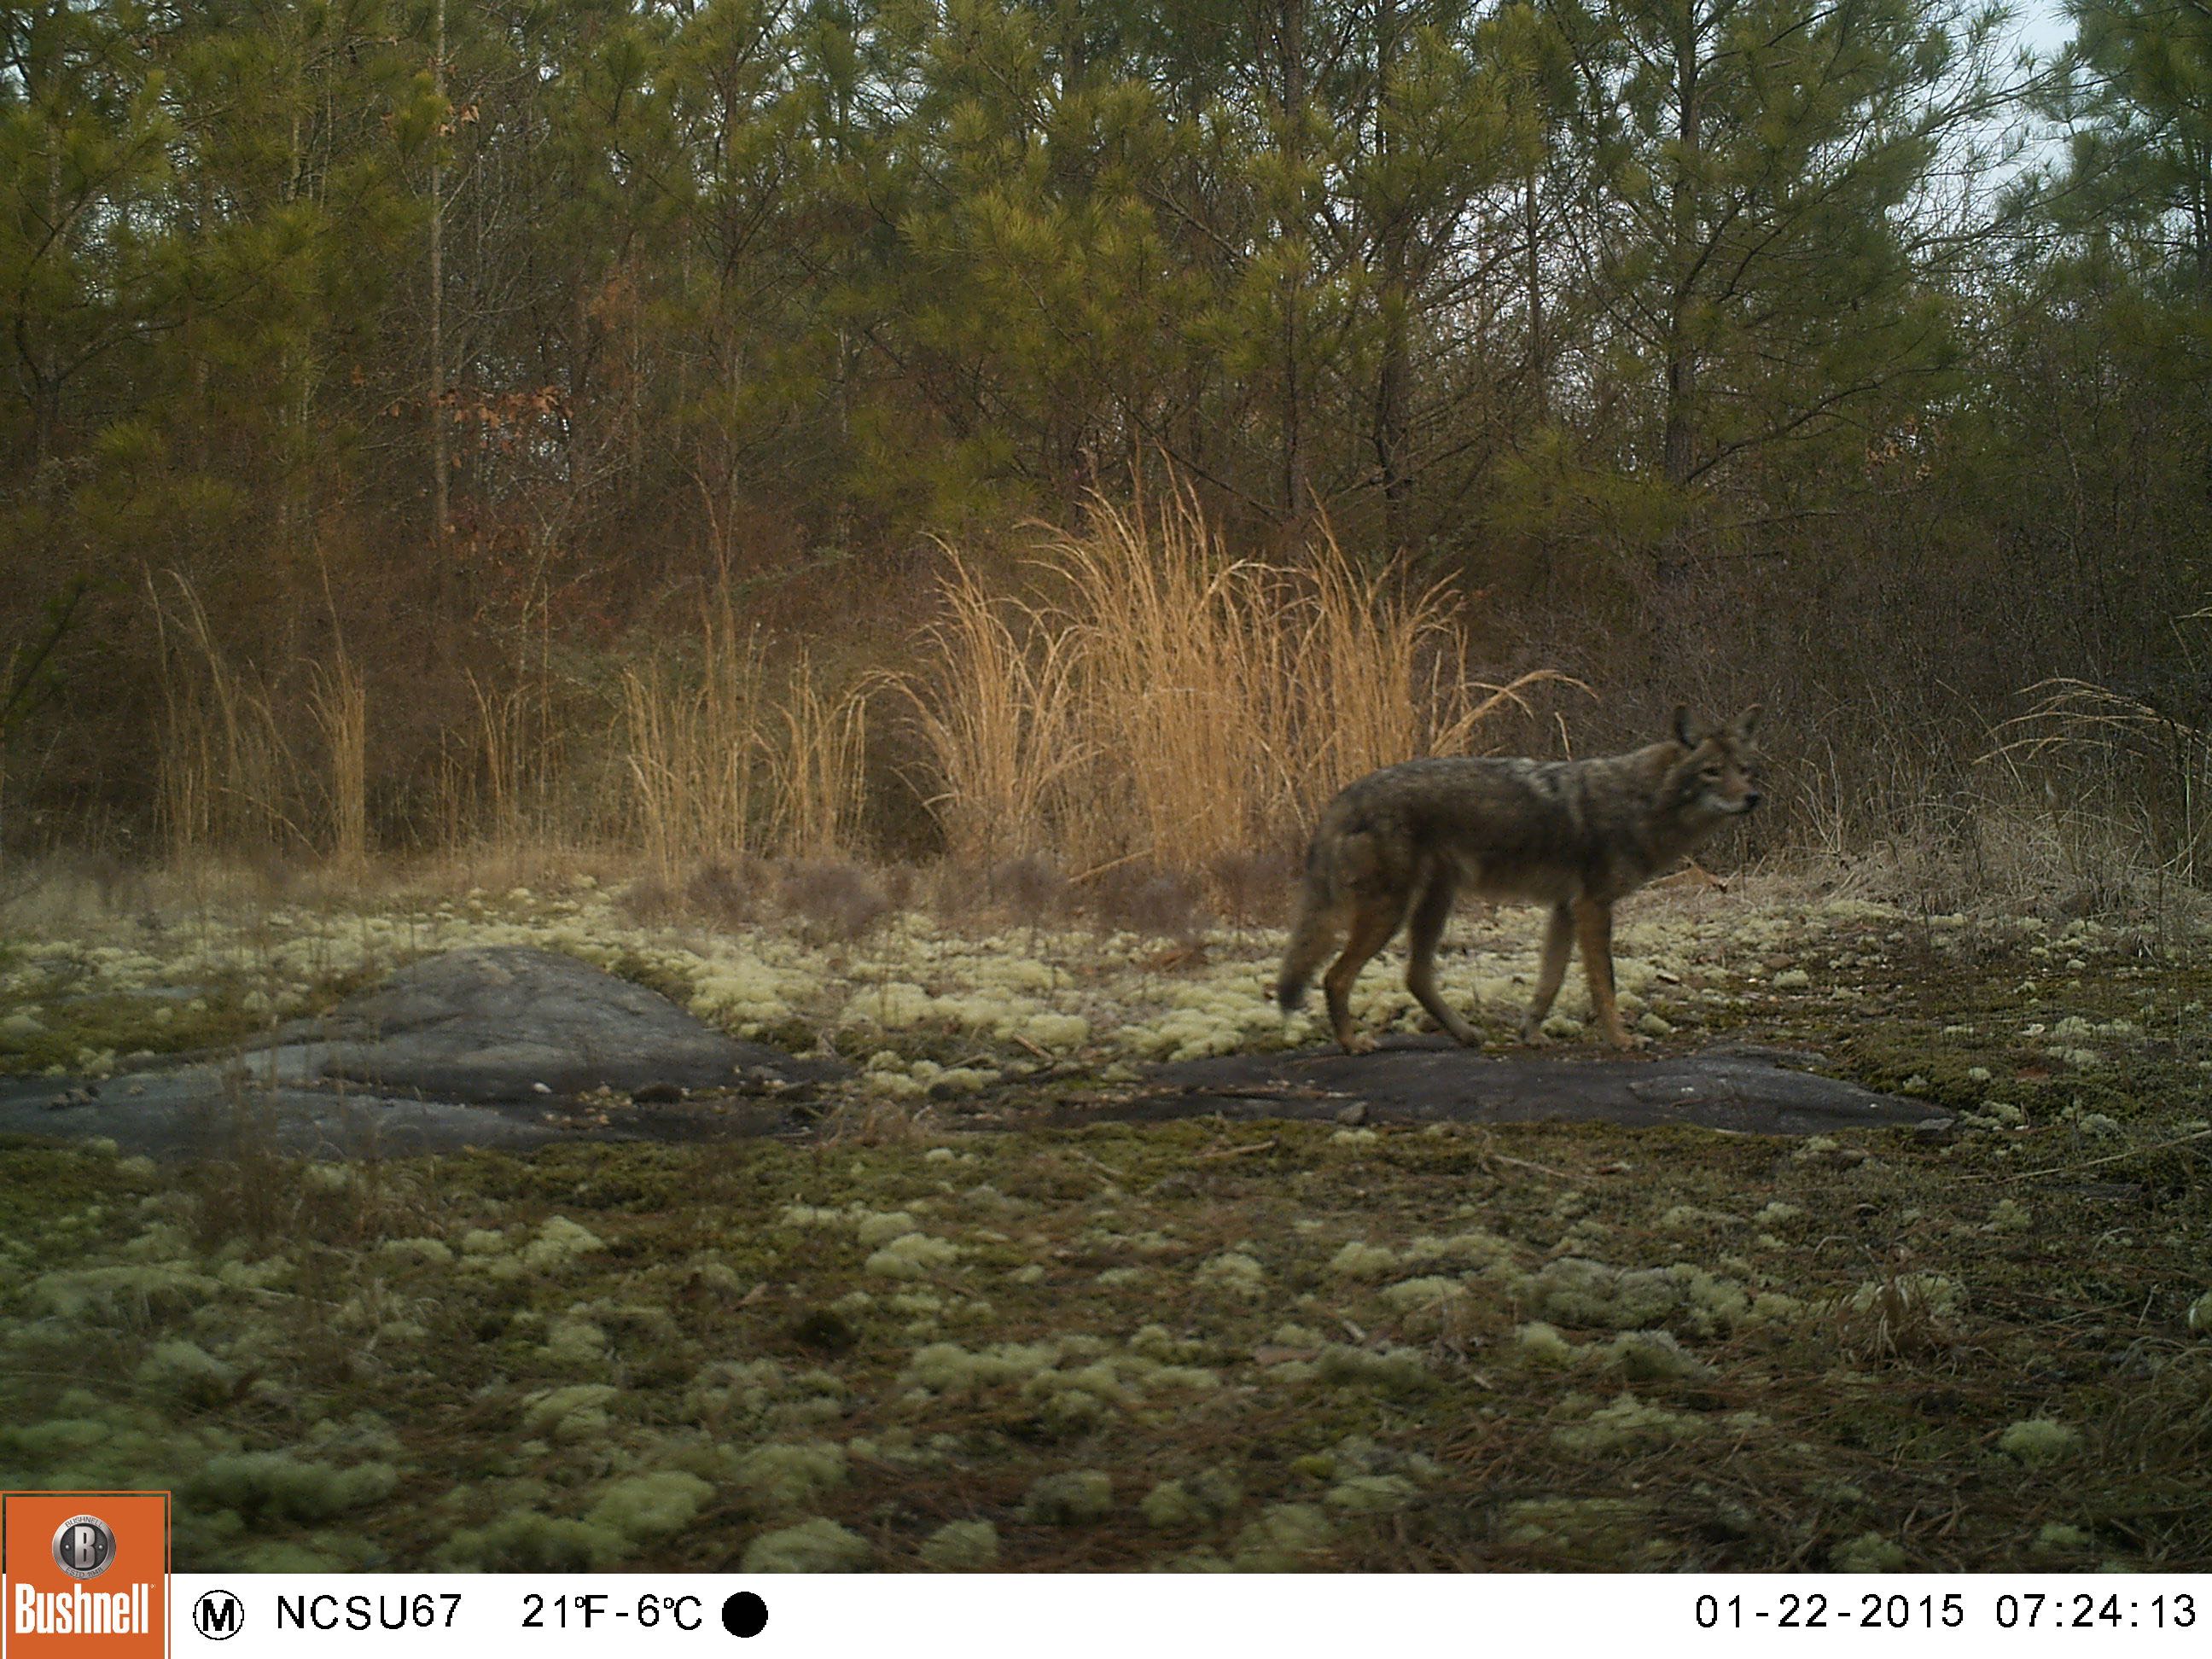 Coyote on camera trap